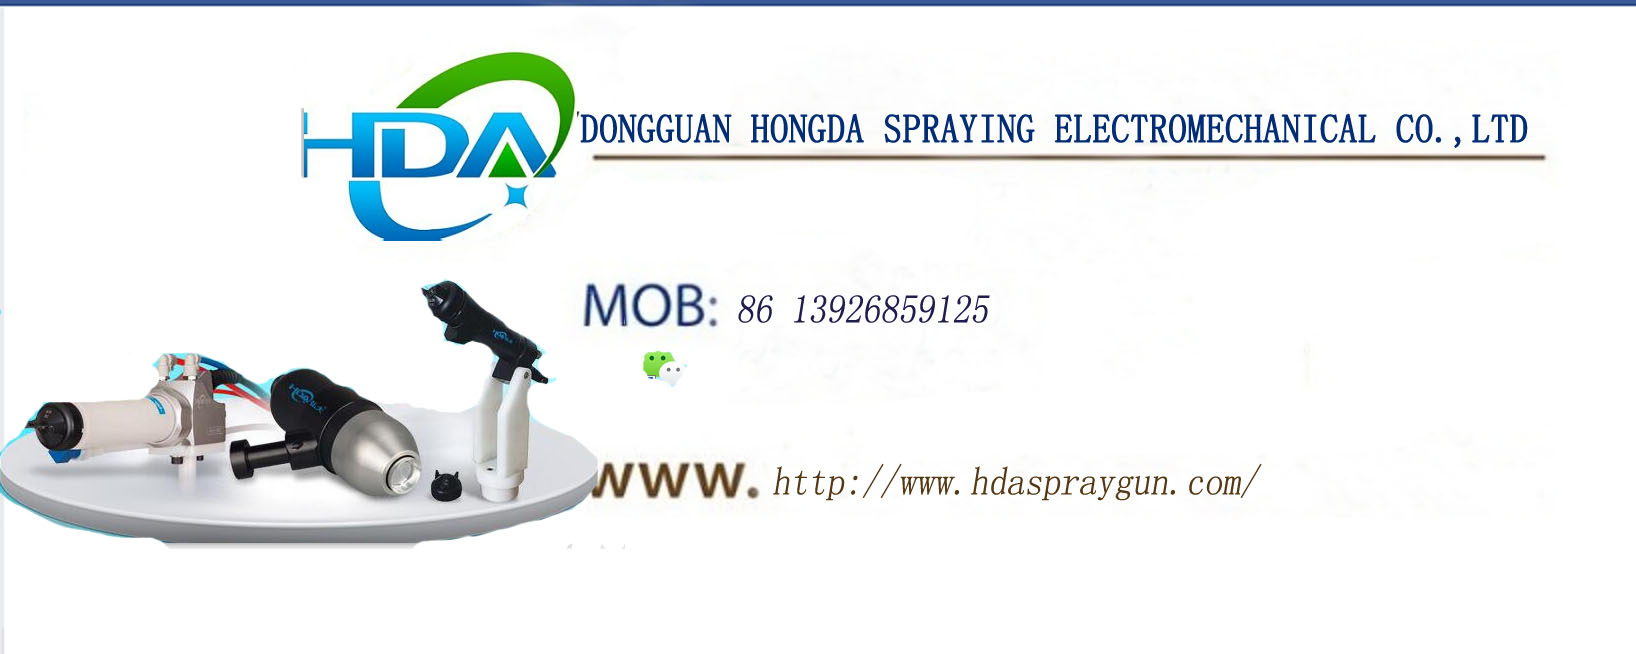 HDA electrostatic spray gun | www.hdaspraygun.com